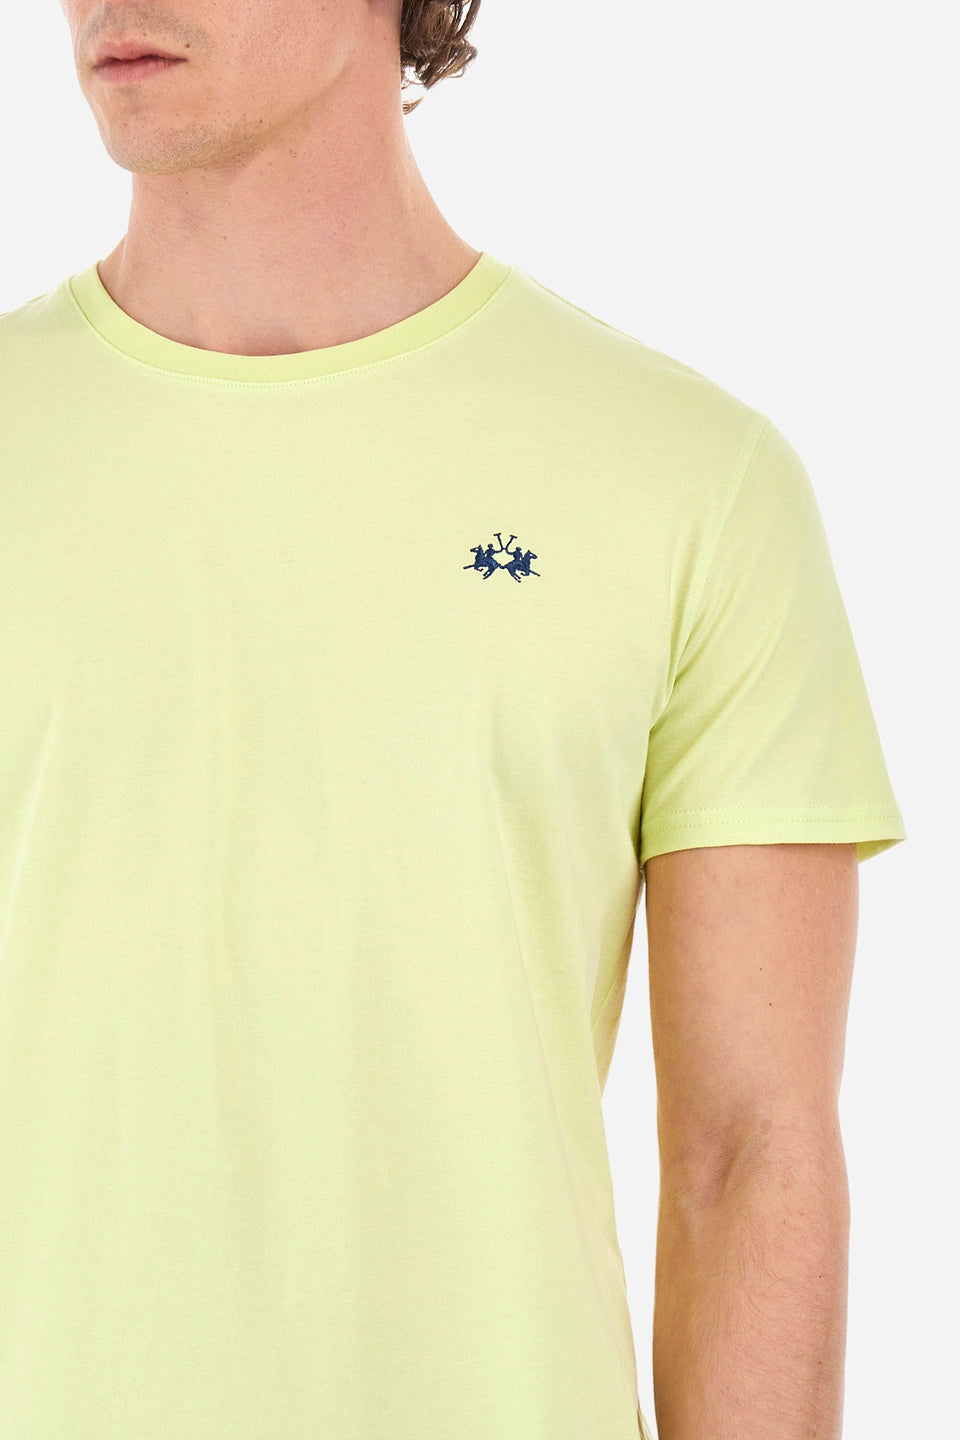 La Martina Regular Fit Cotton T-shirt-Serge | Lime